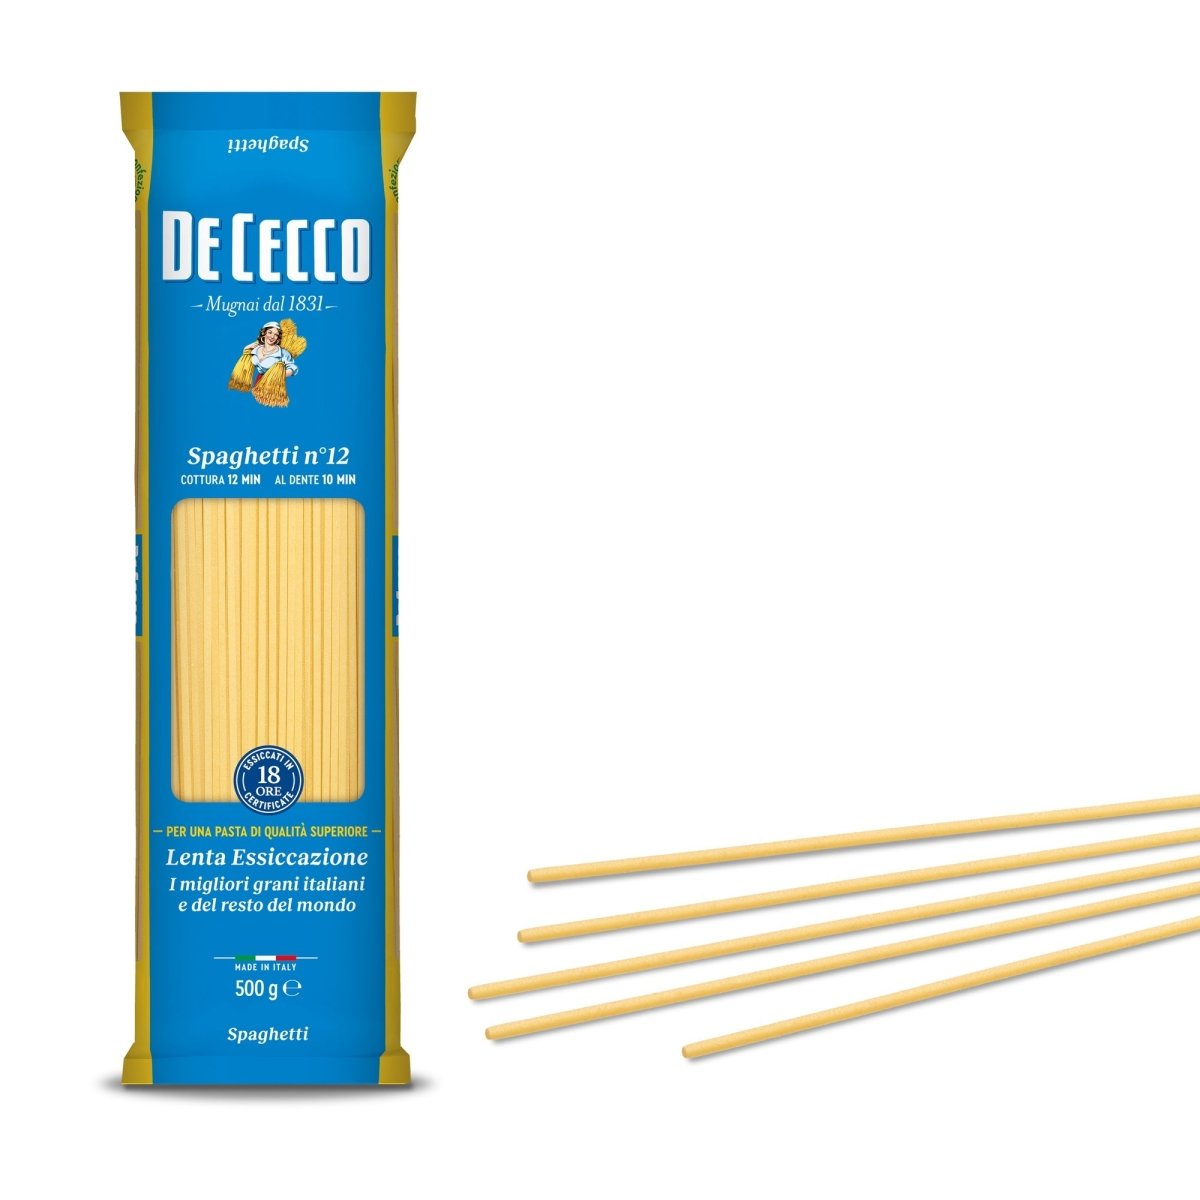 De Cecco Spaghetti n° 12 500g - Tulsidas